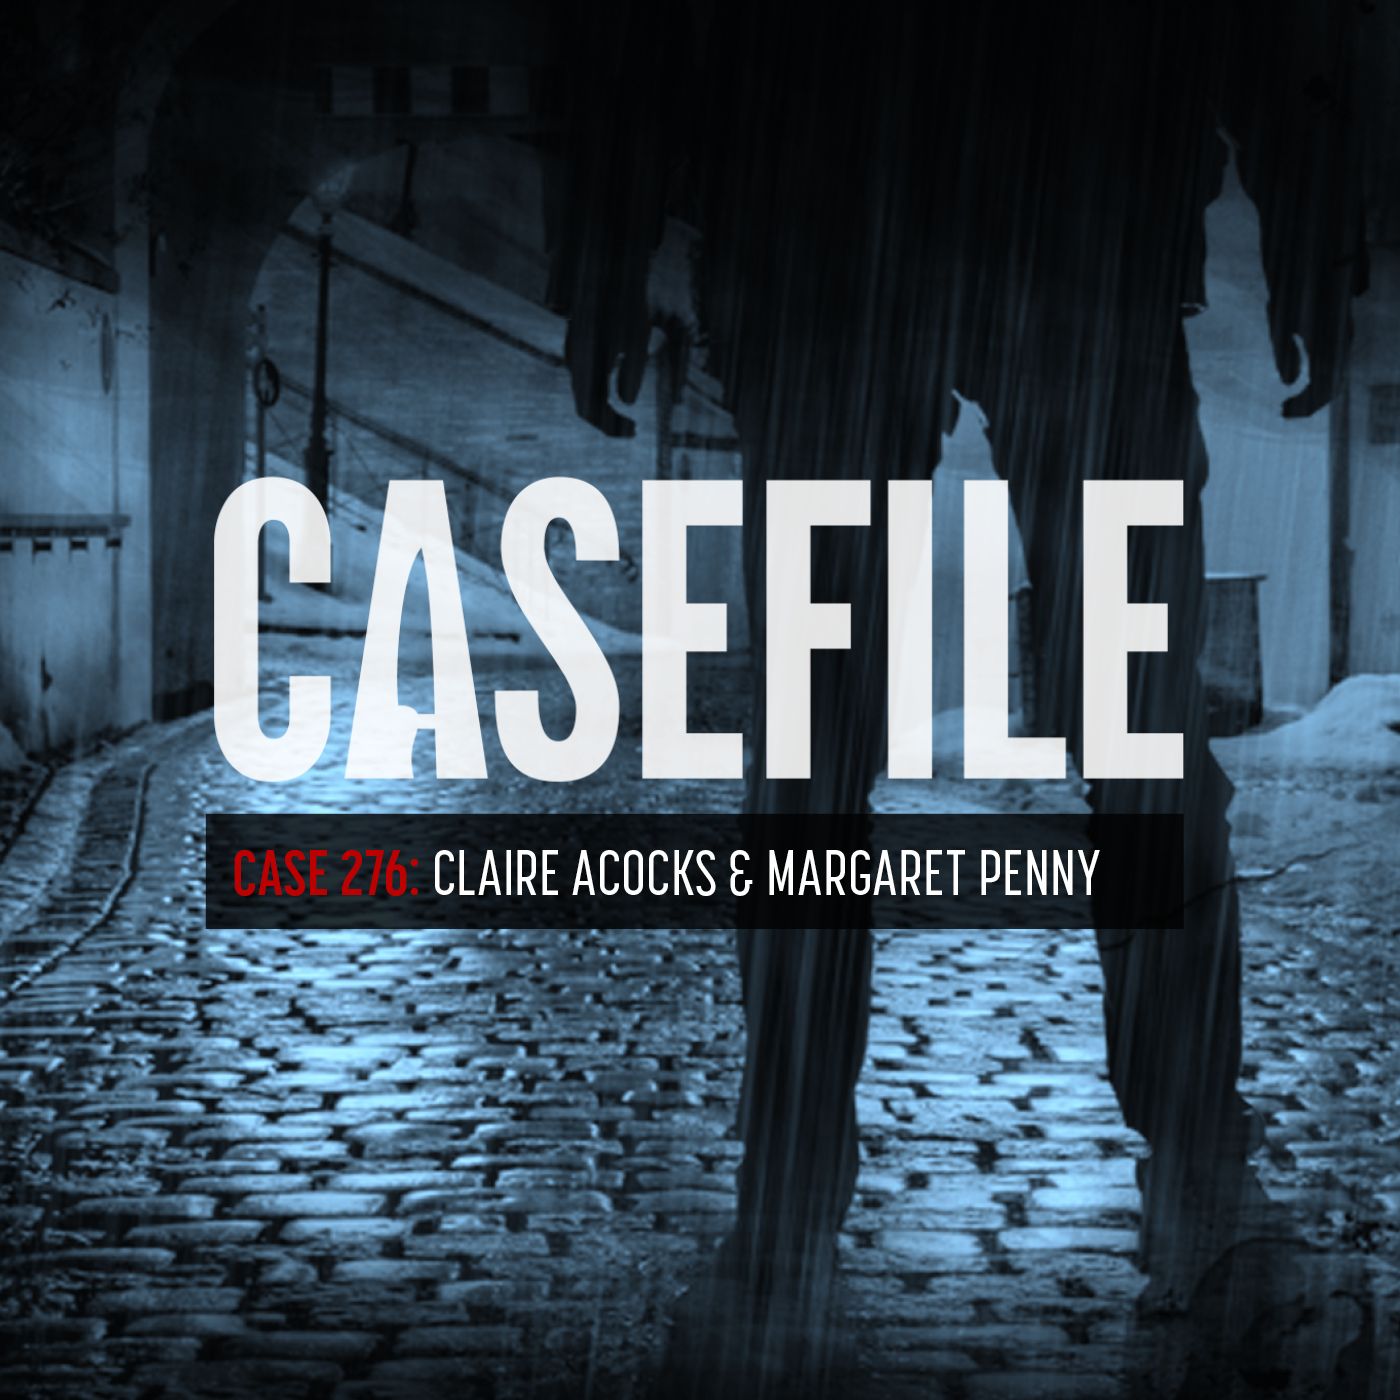 Case 276: Claire Acocks & Margaret Penny